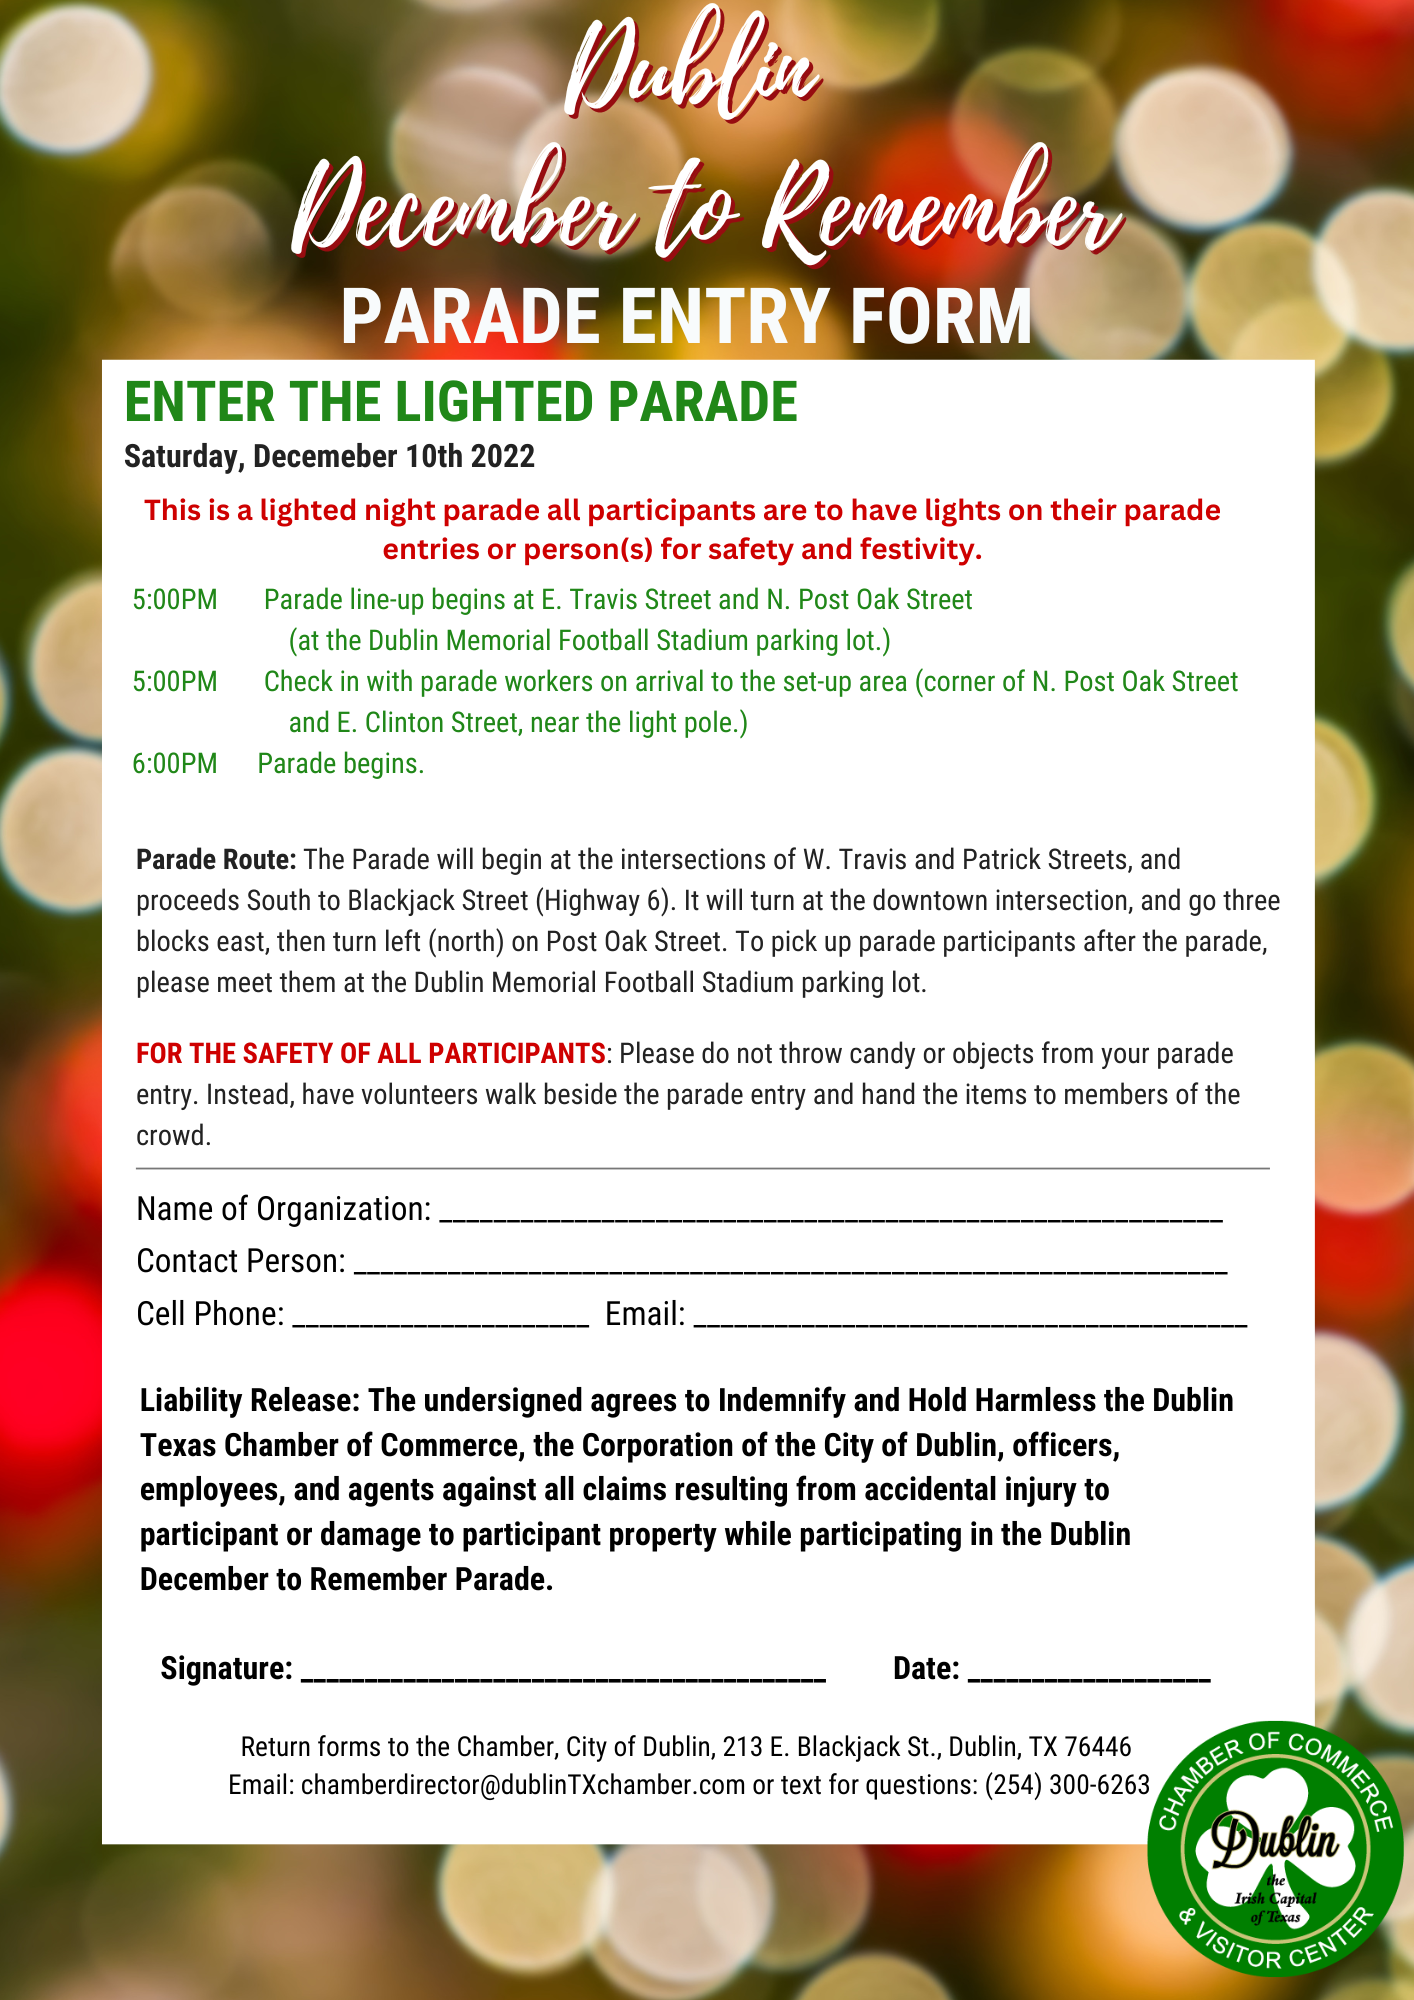 Parade Entry Form for Christmas 2022